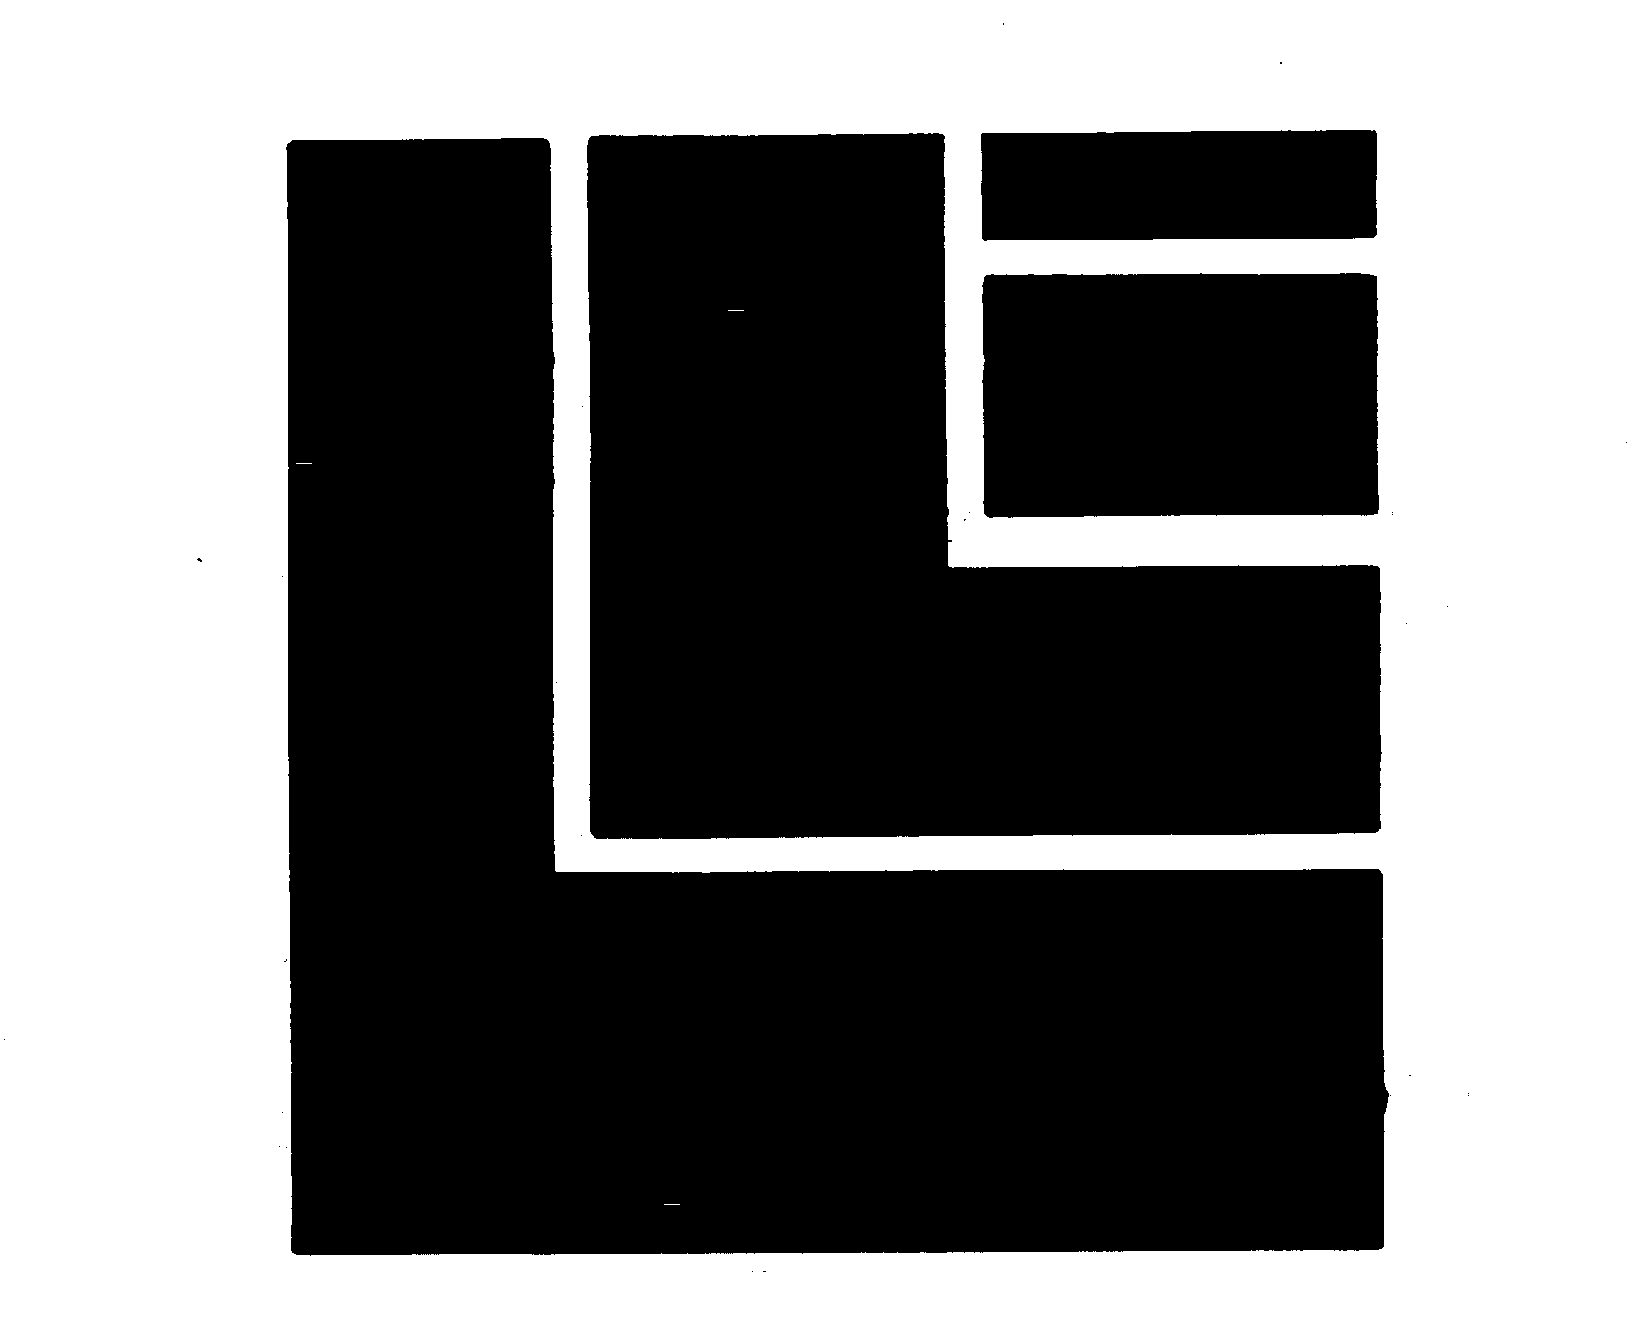 Trademark Logo LLI